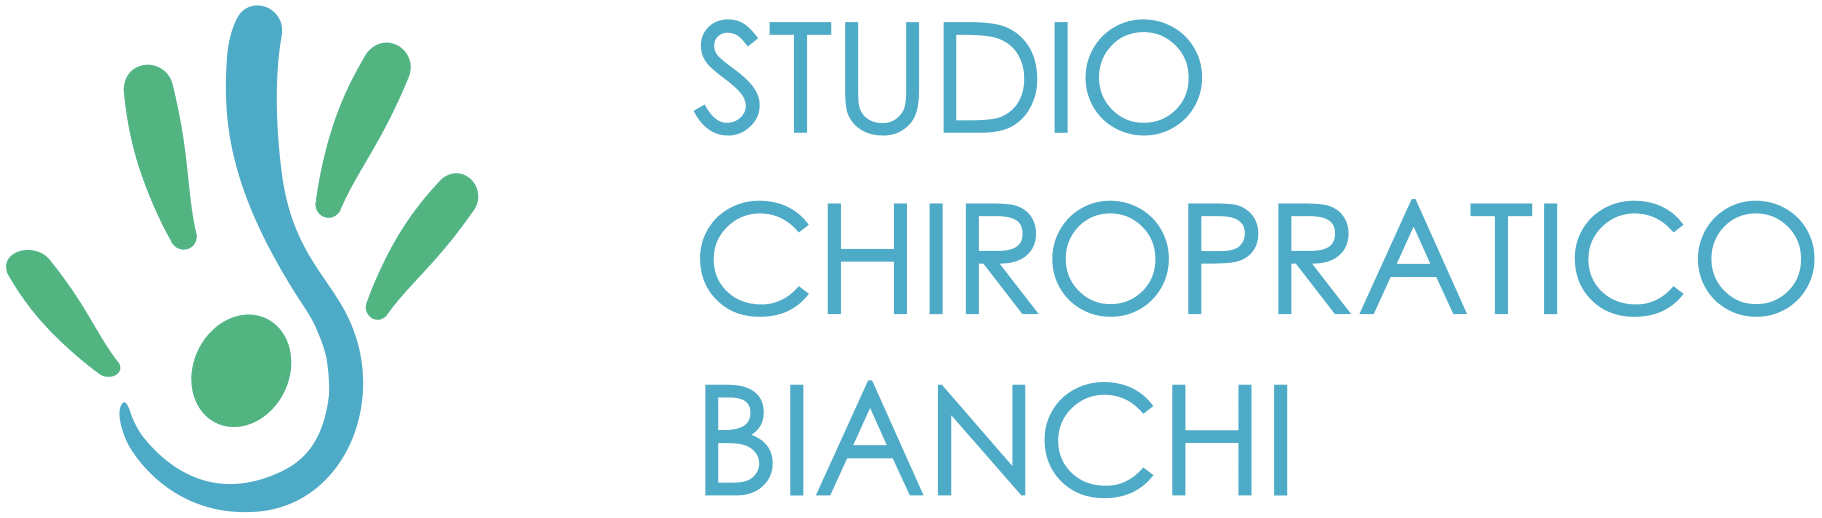 Studio Chiropratico Bianchi